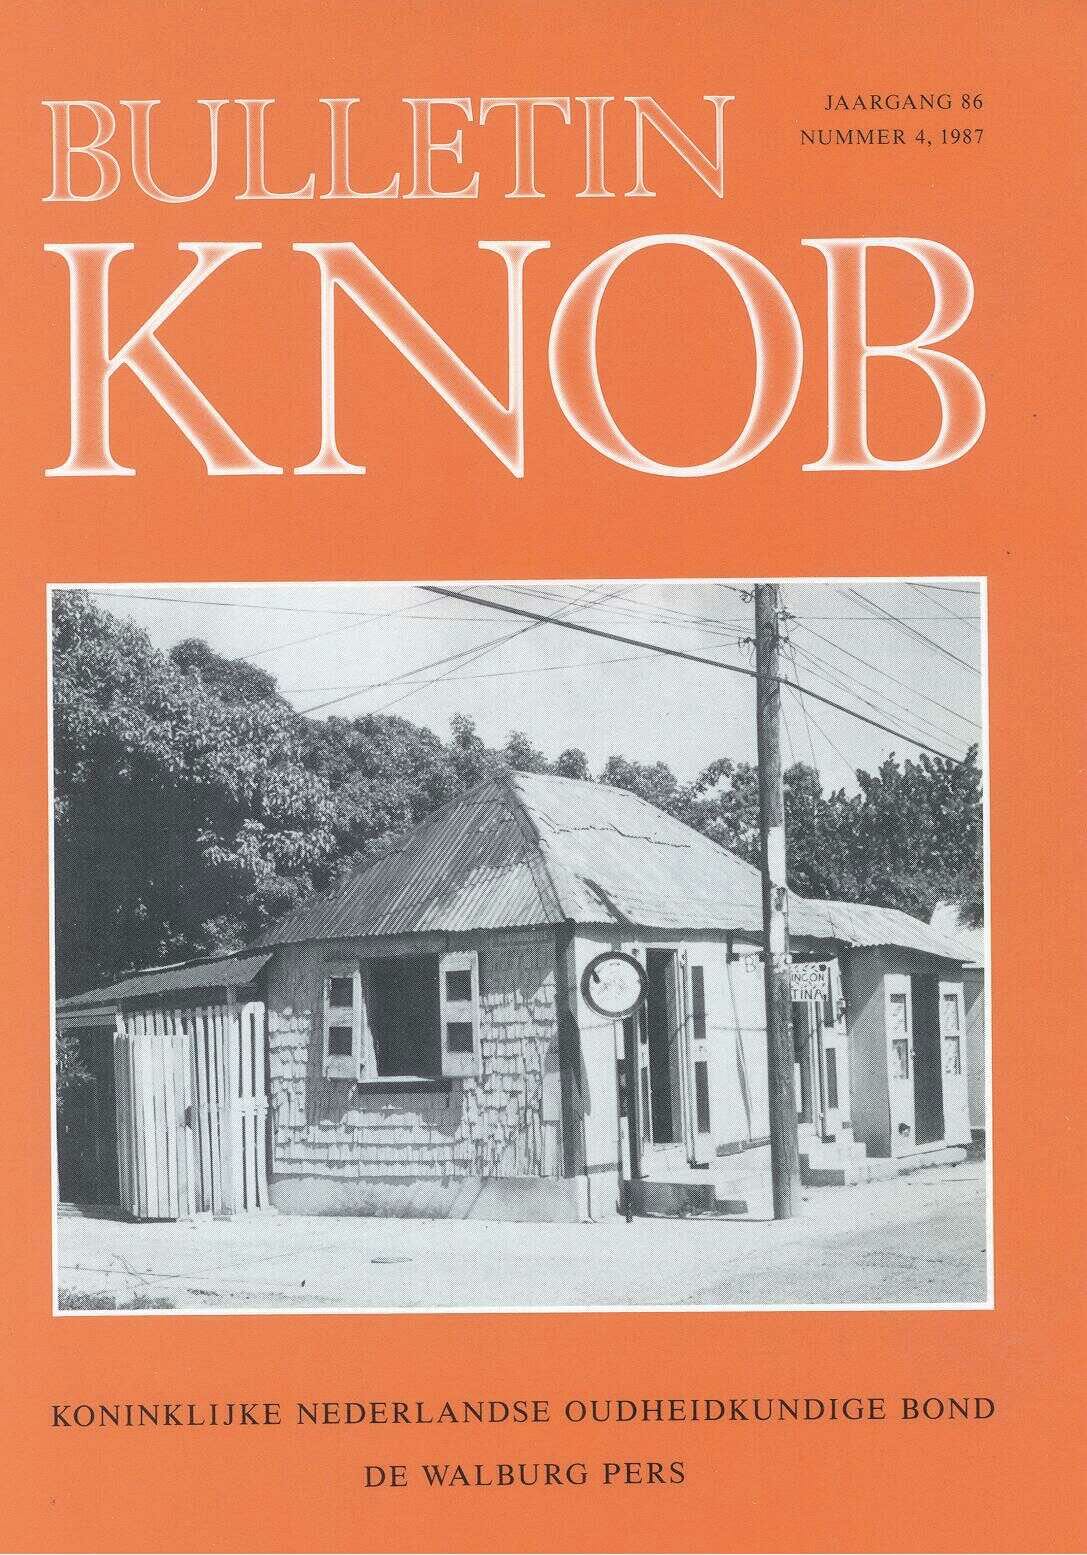 						Toon Bulletin KNOB 86 (1987) 4
					